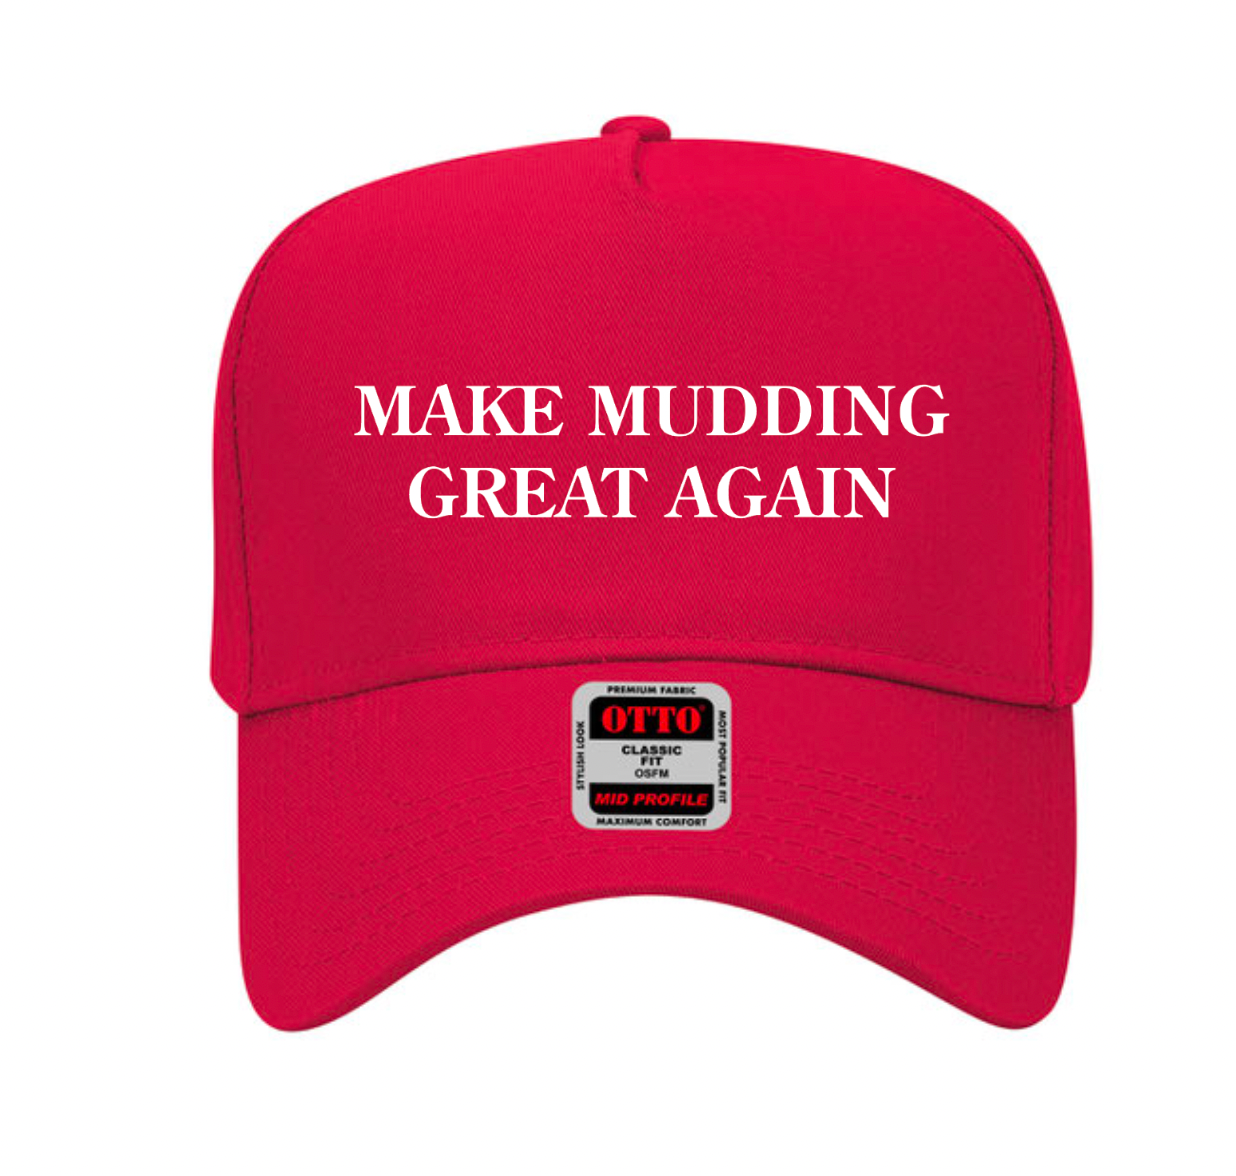 MAKE MUDDING GREAT AGAIN HAT